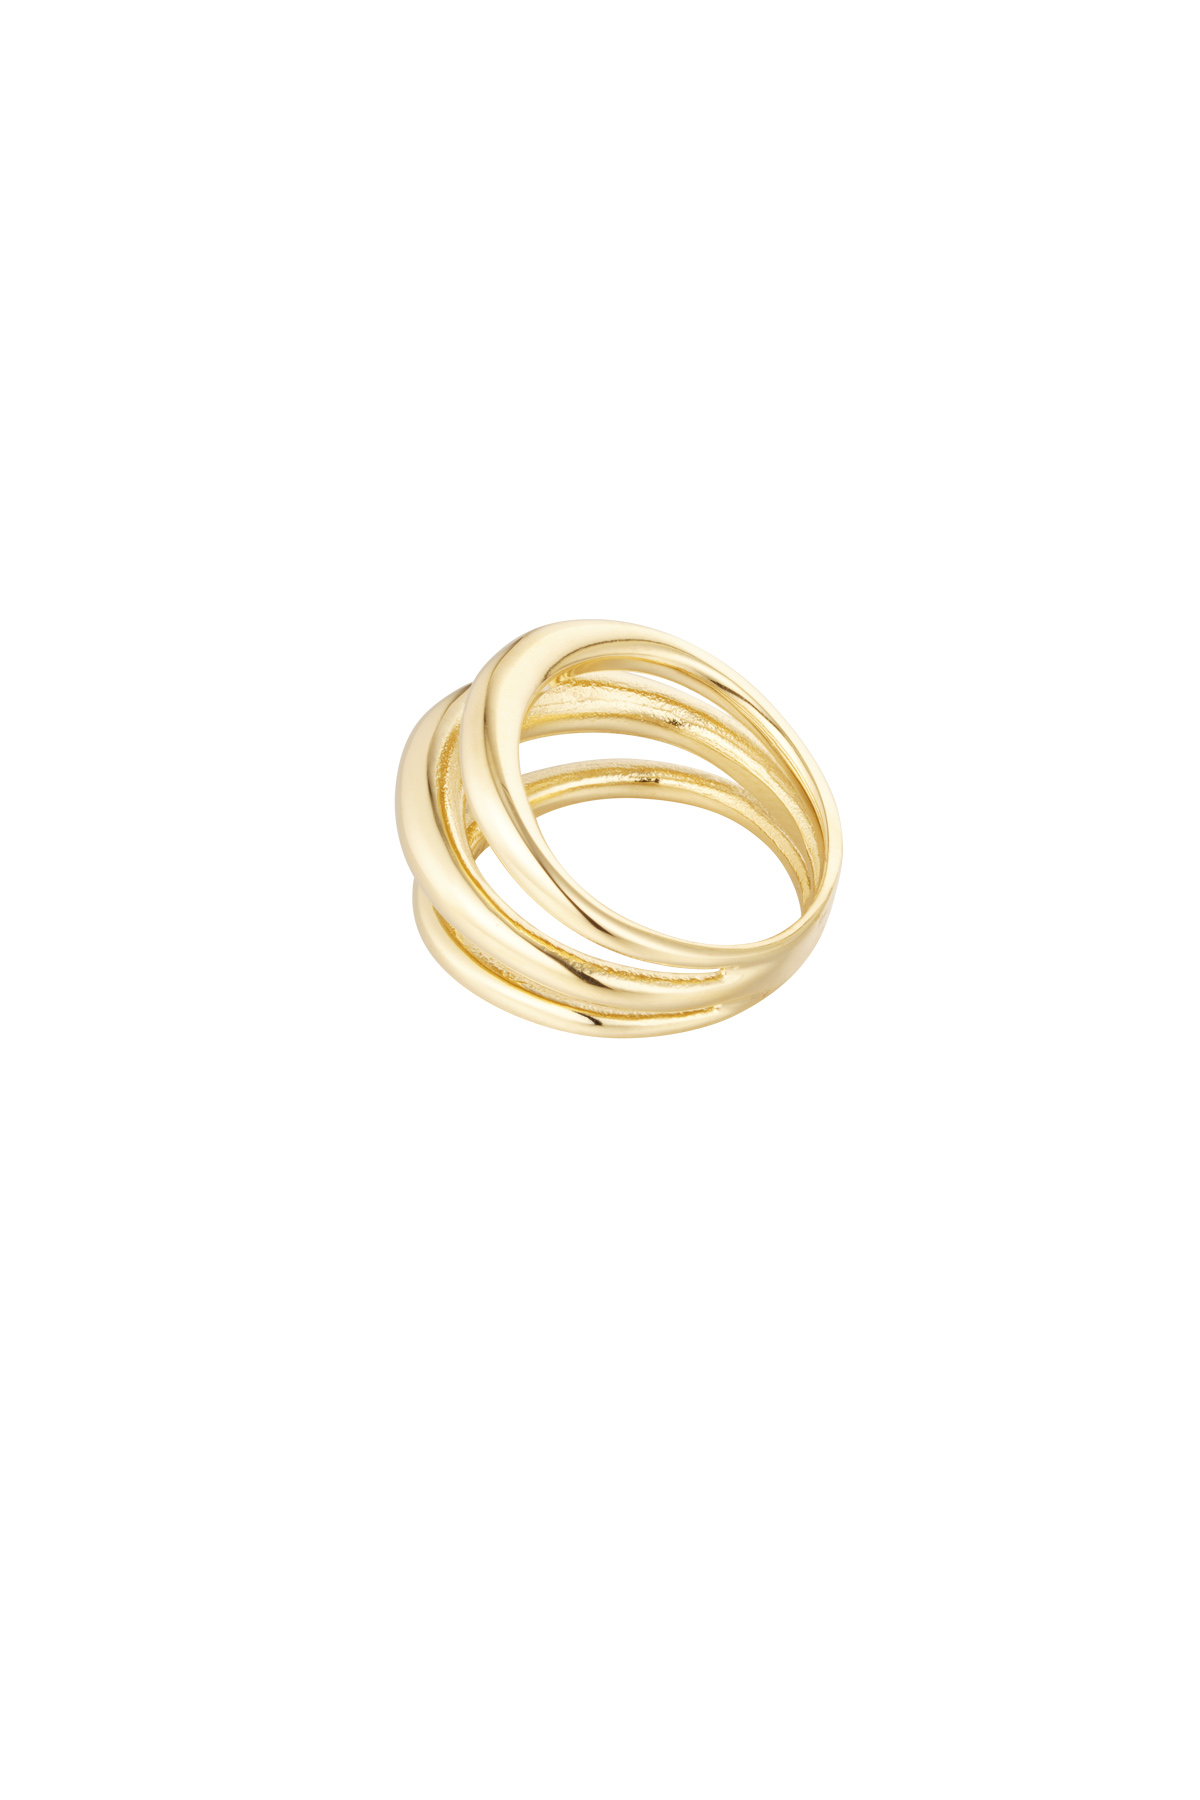 Ring drie lagen - goud h5 Afbeelding3